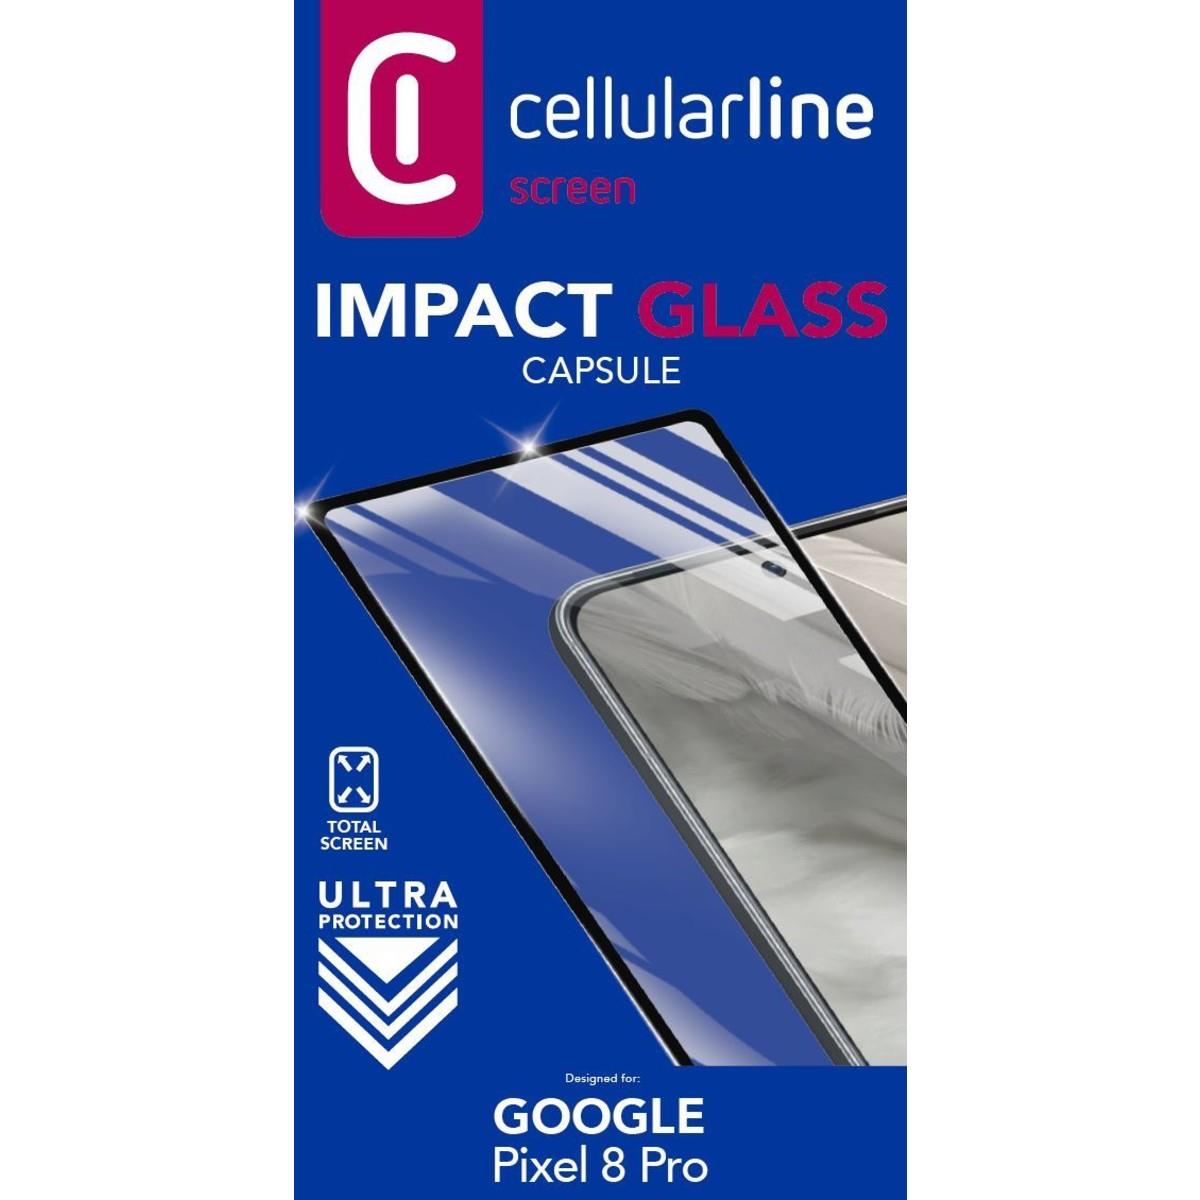 Schutzglas IMPACT GLASS CAPSULE für Google Pixel 8 Pro